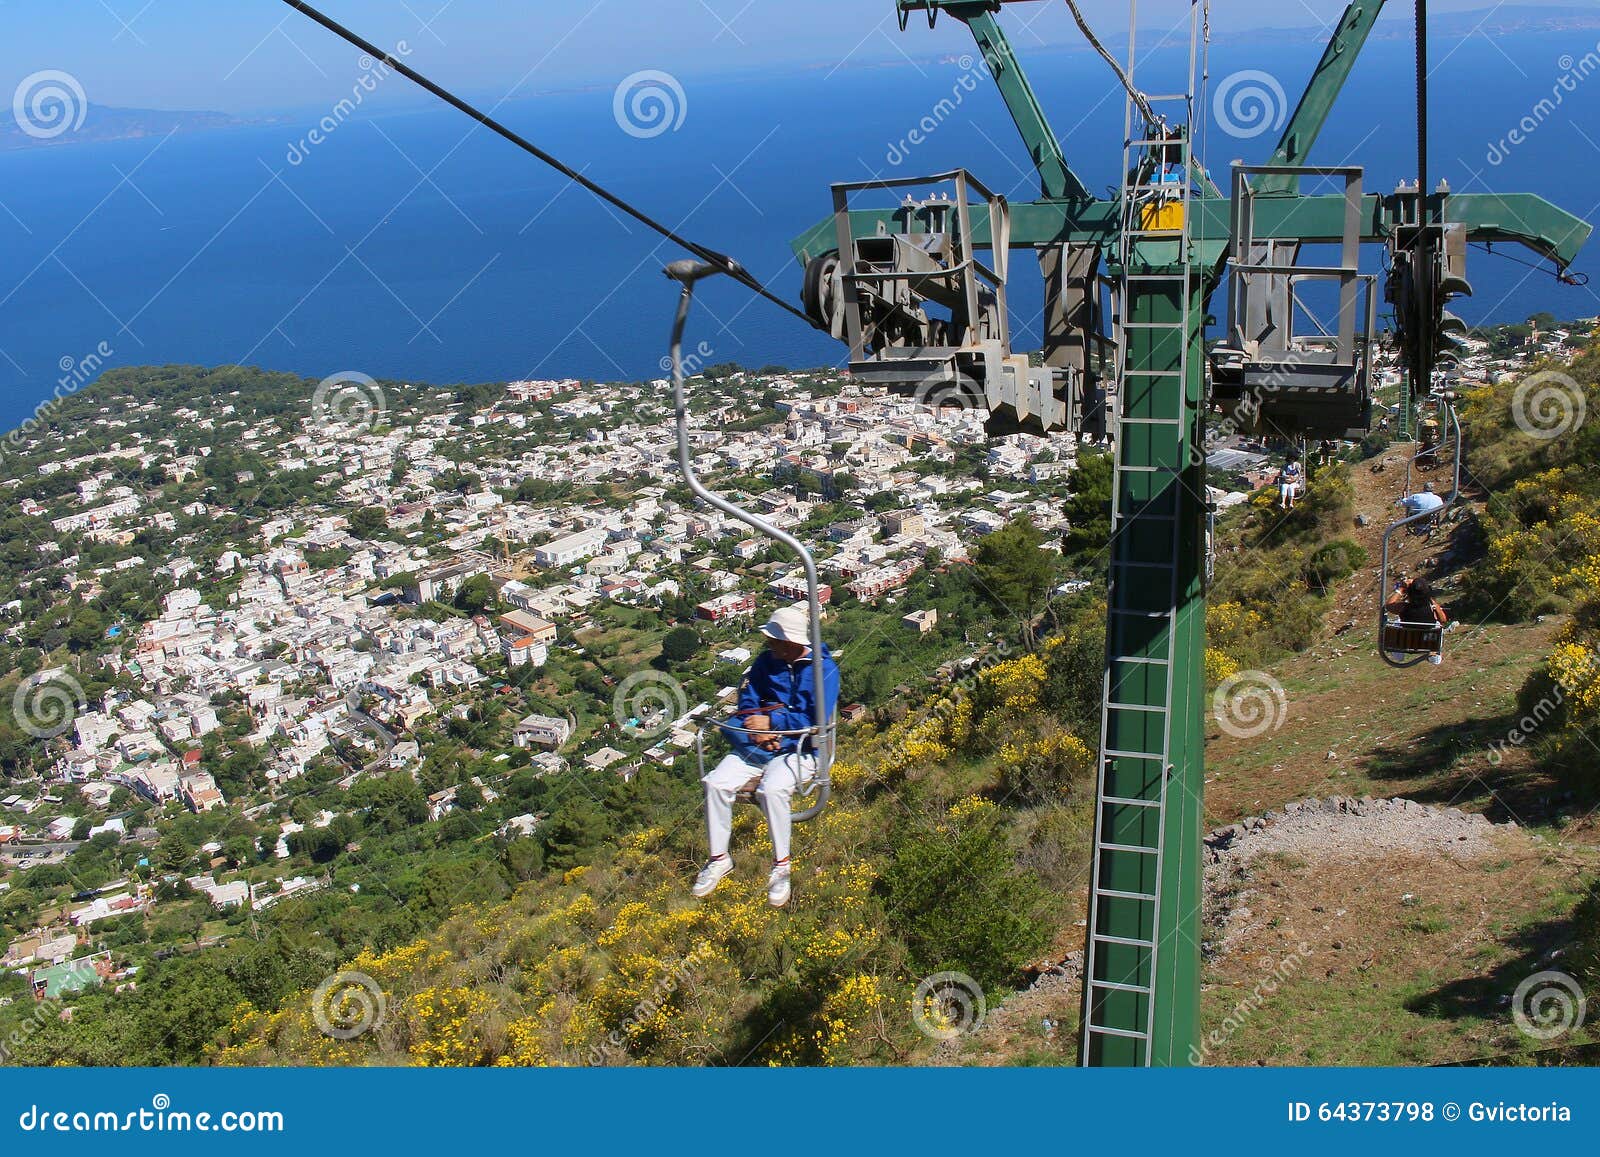 Capri Chairlift To Mount Solaro Editorial Stock Photo Image Of Grass